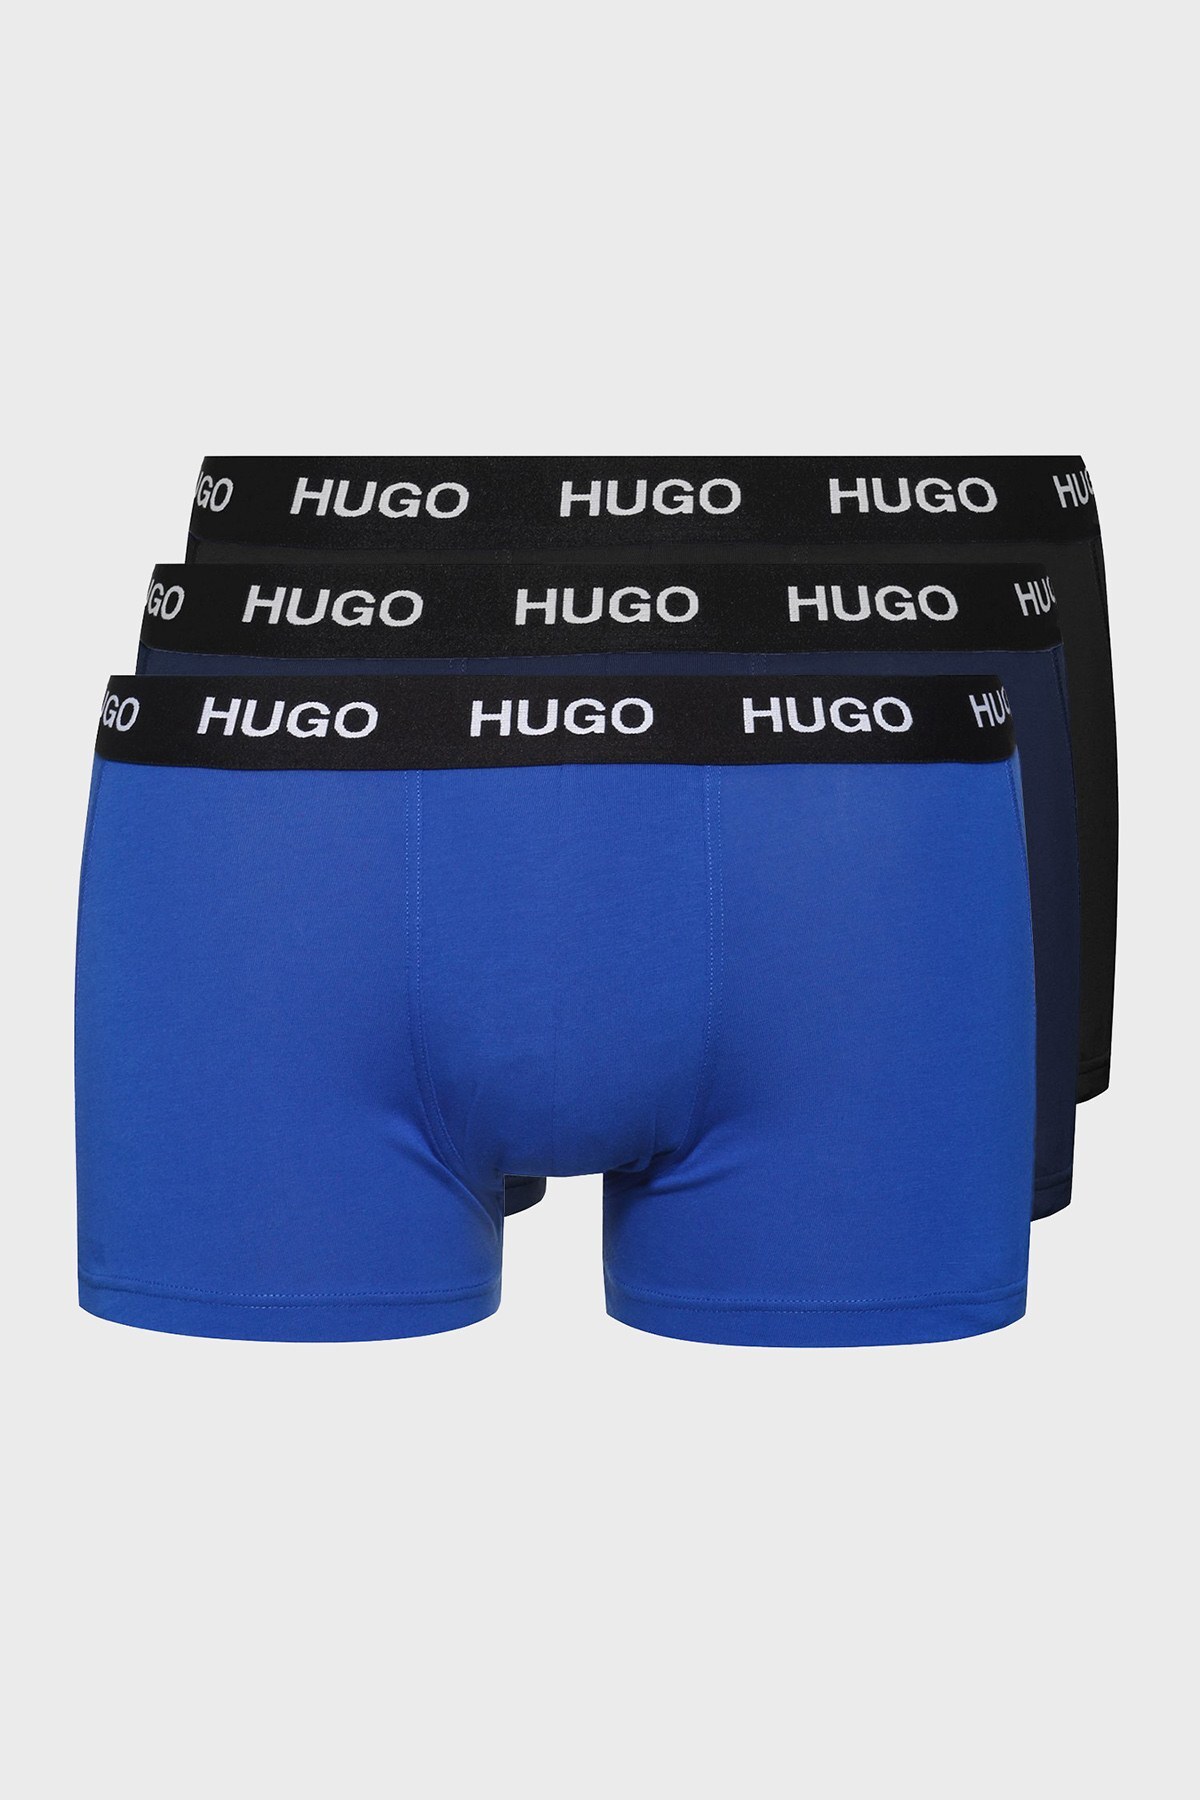 Hugo Esnek Pamuklu 3 Pack Erkek Boxer 50449351 966 Siyah-Lacivert-Saks